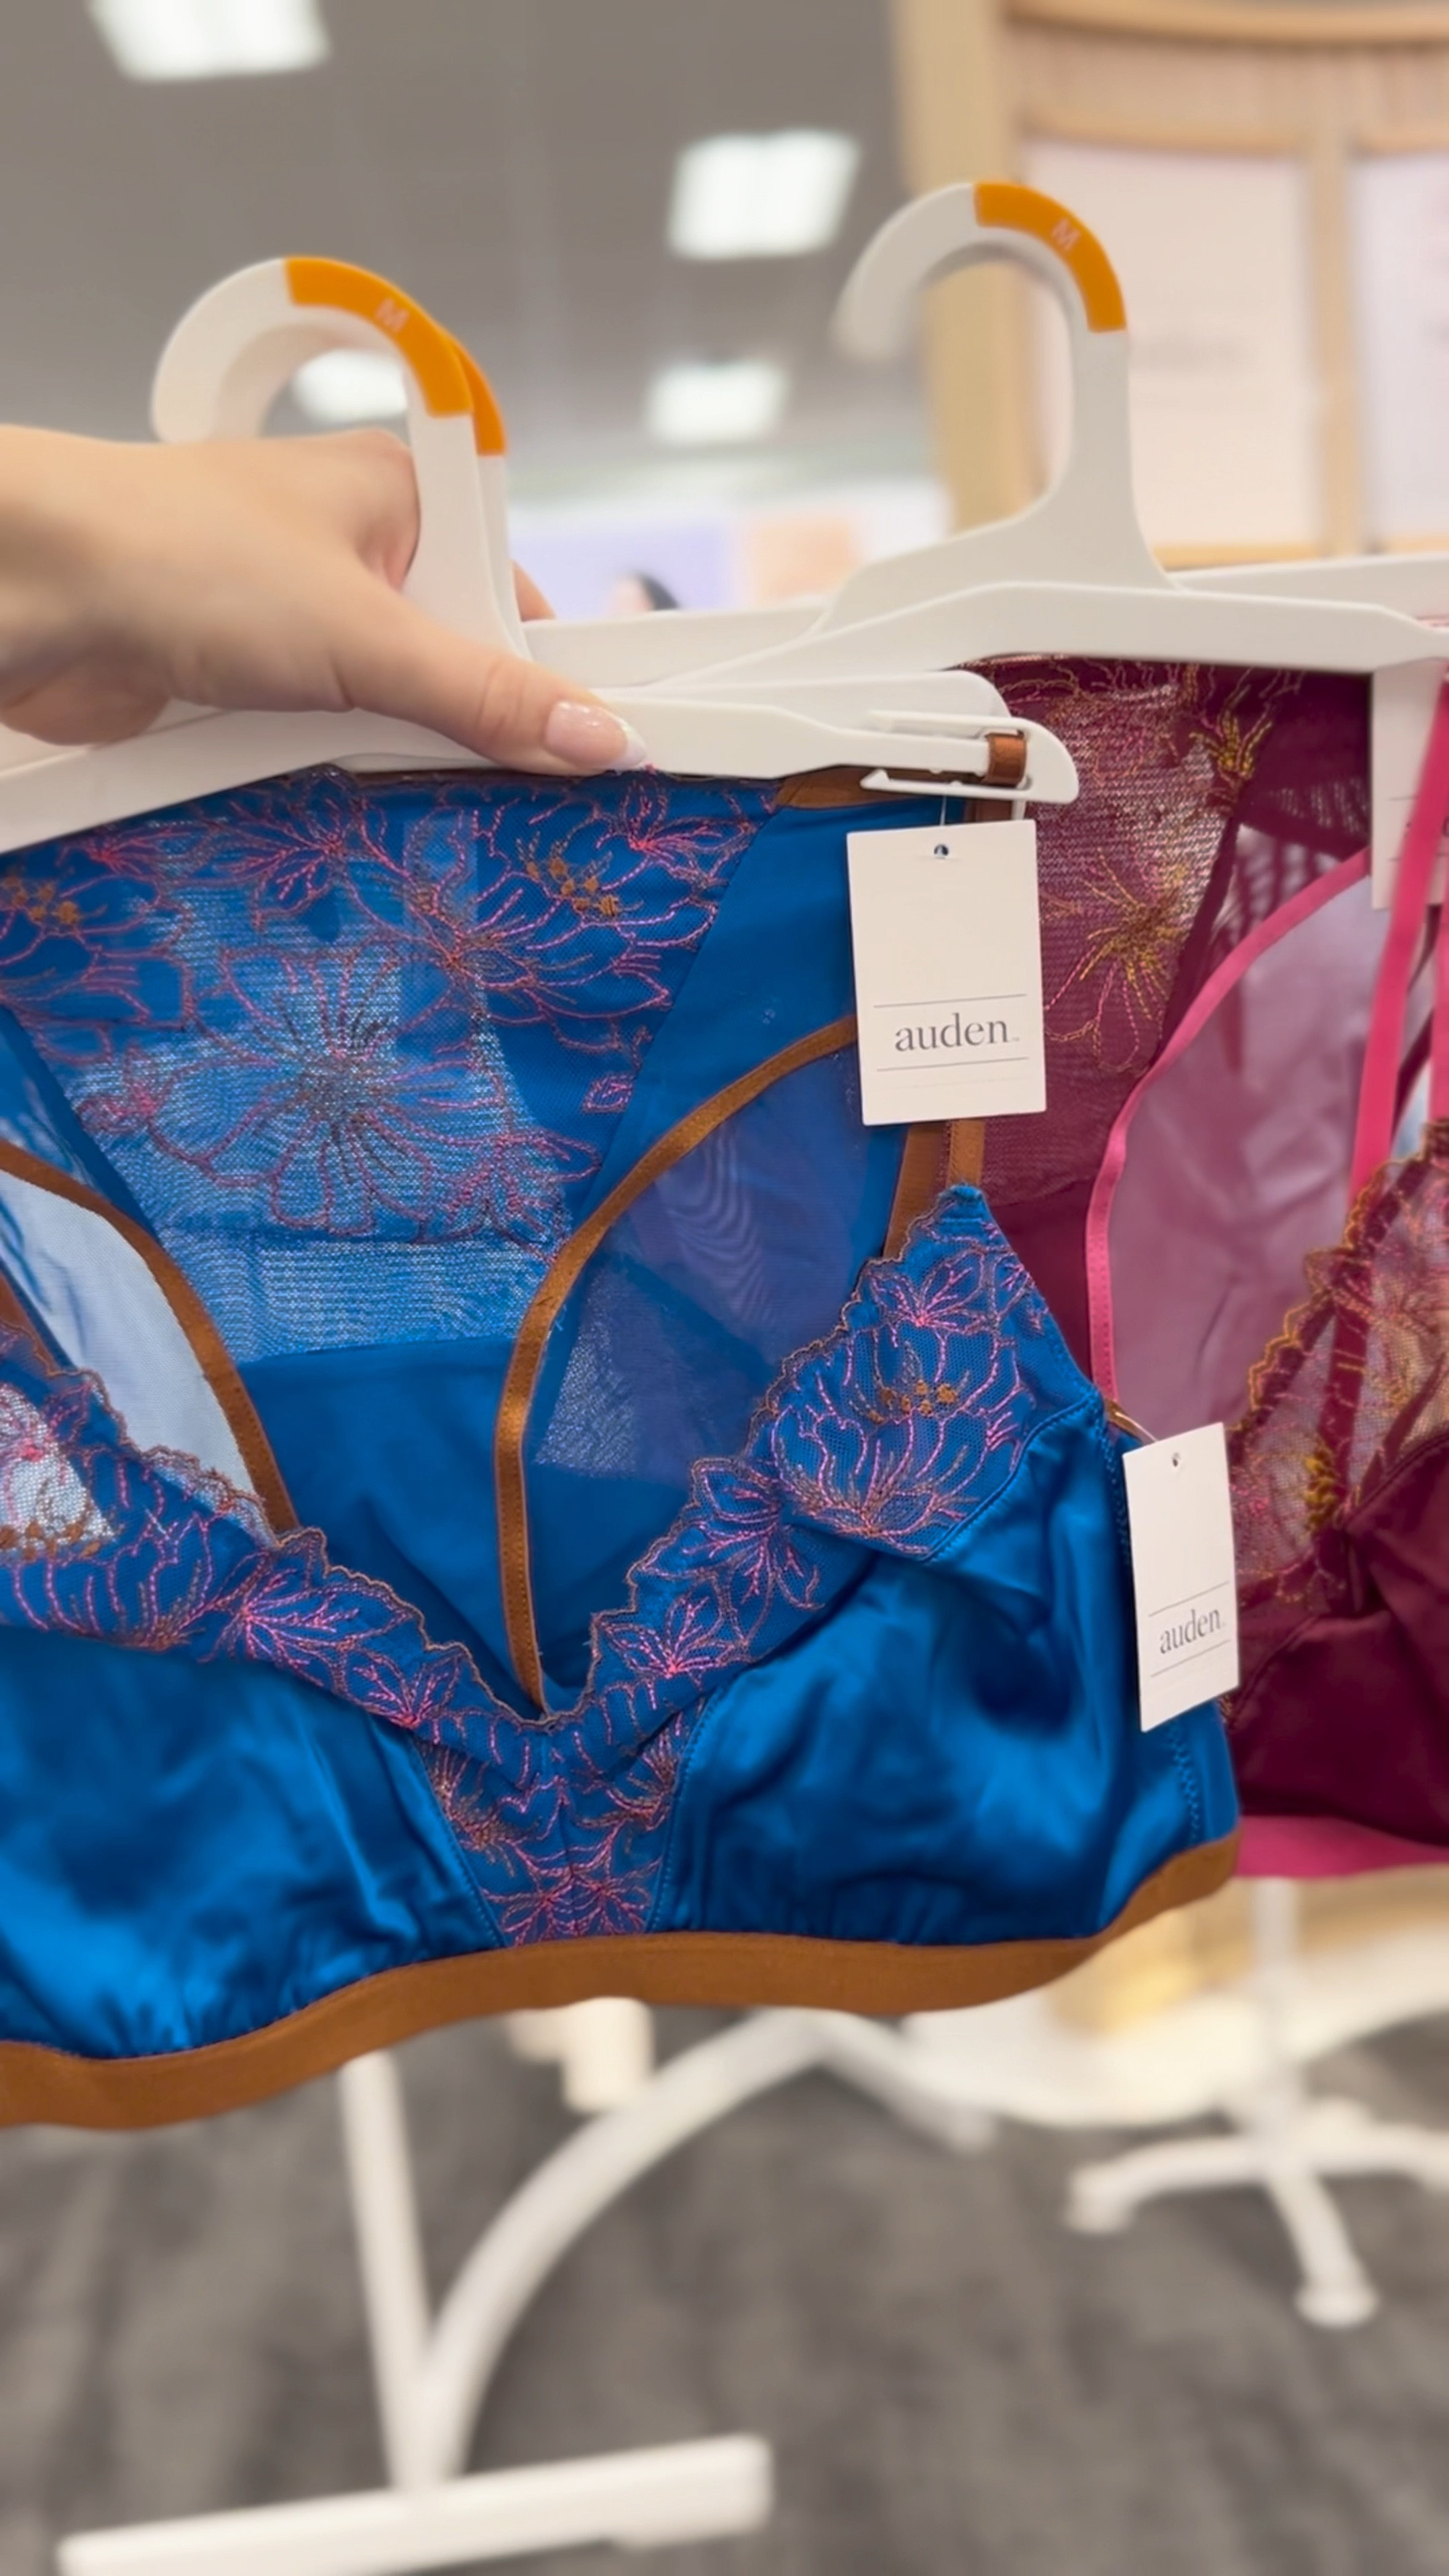 Auden Purple Ribbed Bikini Underwear Women's Size Medium NEW